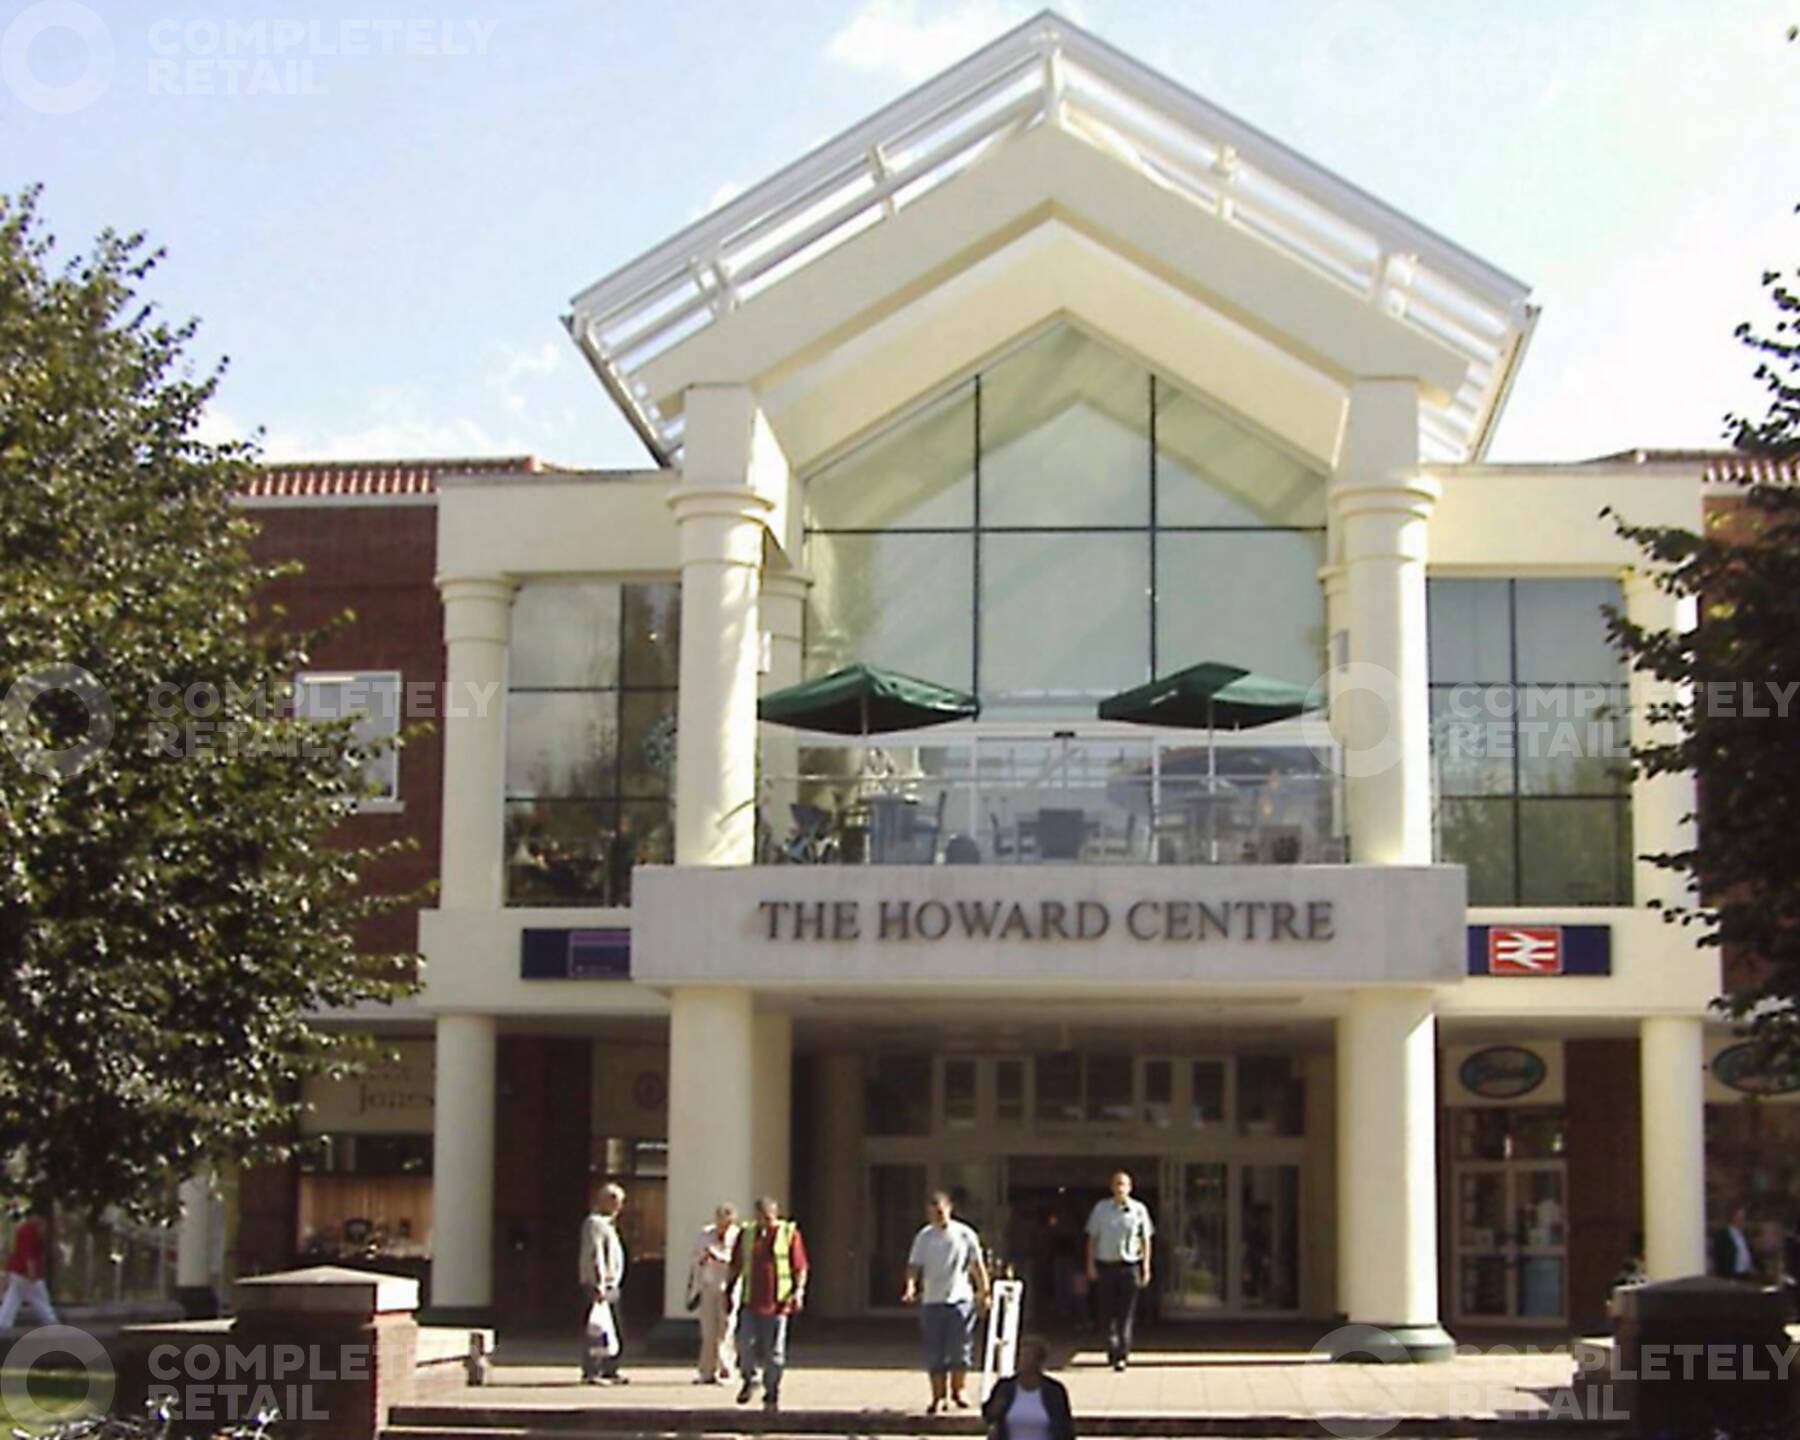 The Howard Centre